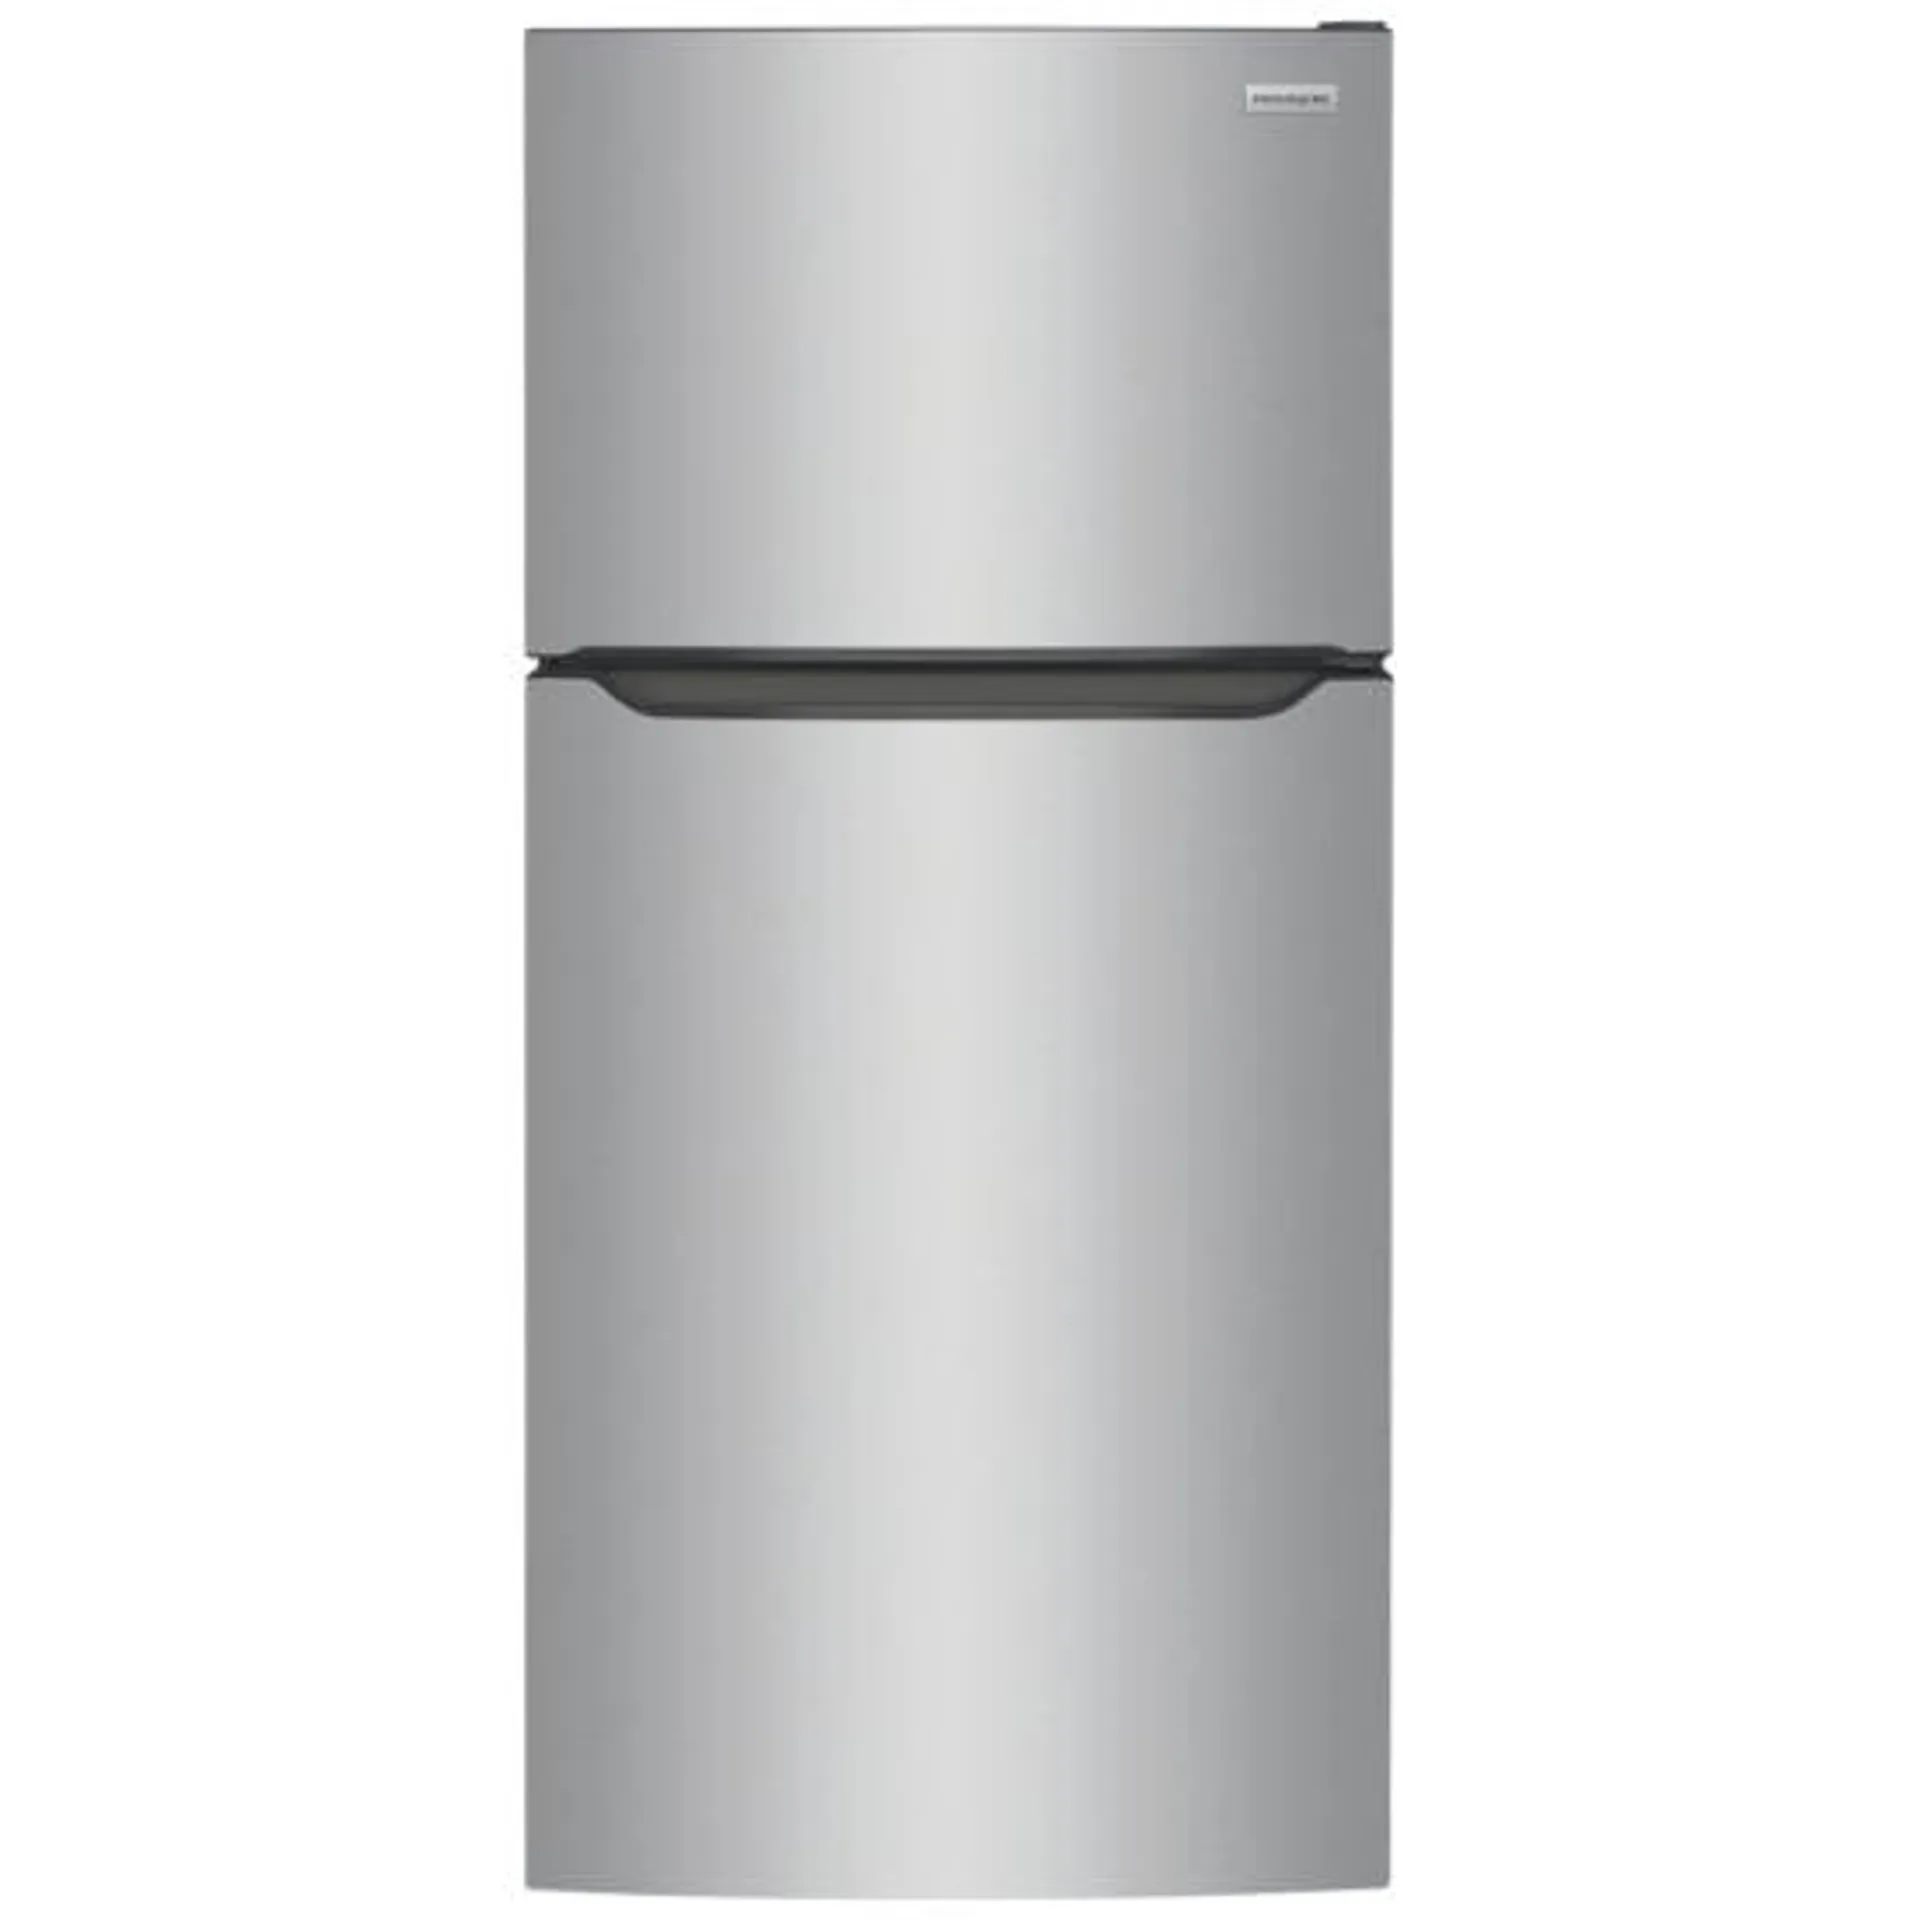 Frigidaire FFTR2045VS Top Freezer Refrigerator, 30 inch Width, 19.6 cu. ft. Capacity, Stainless Steel colour